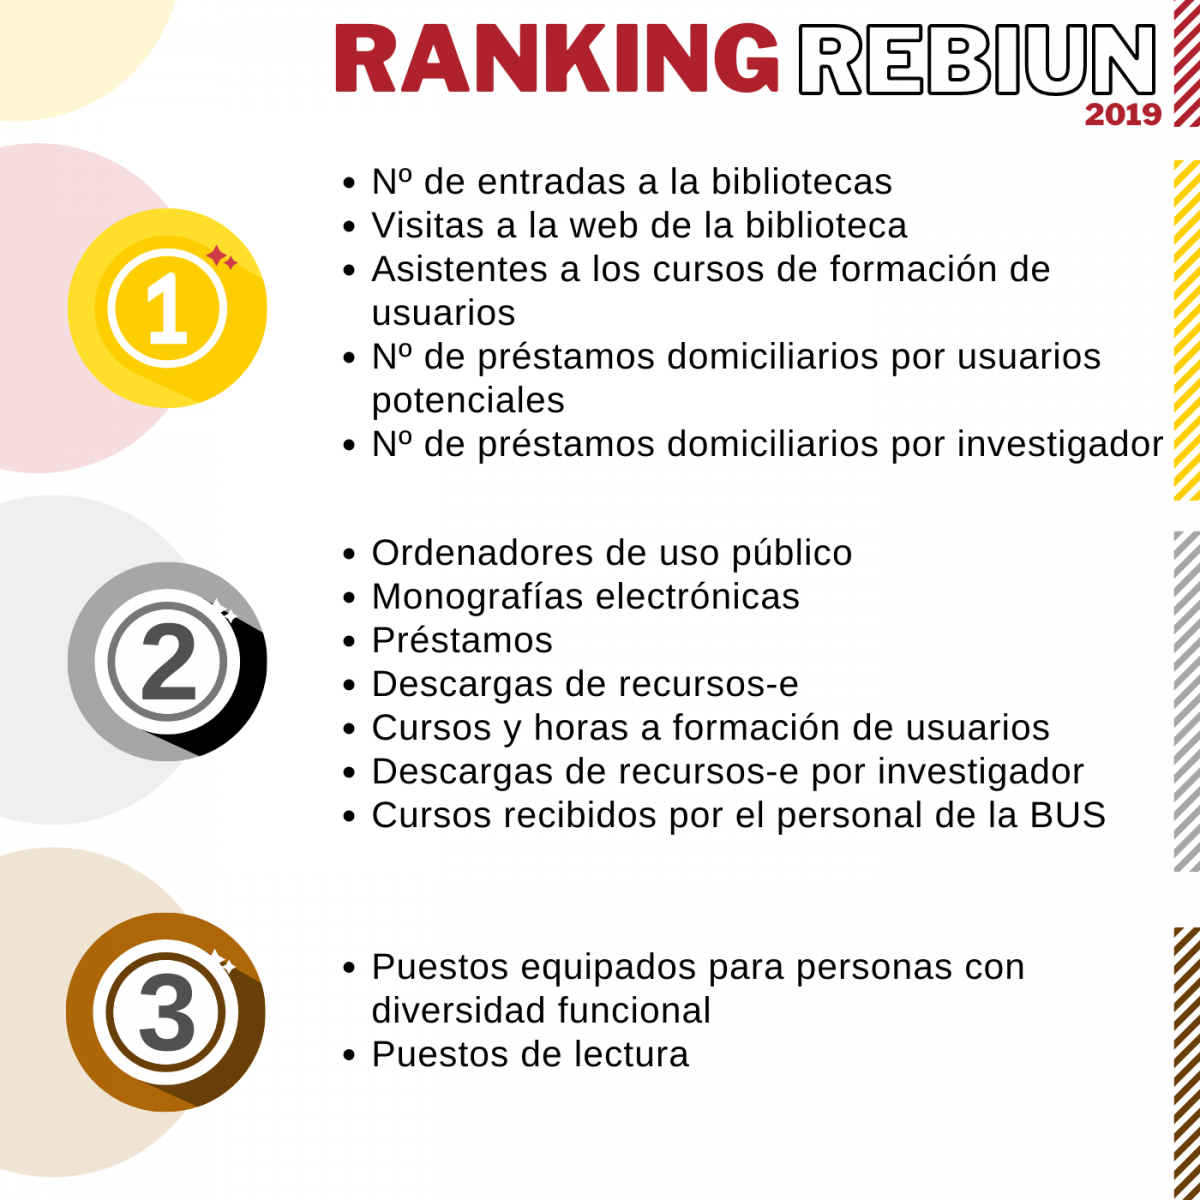 Ranking Rebiun 2019